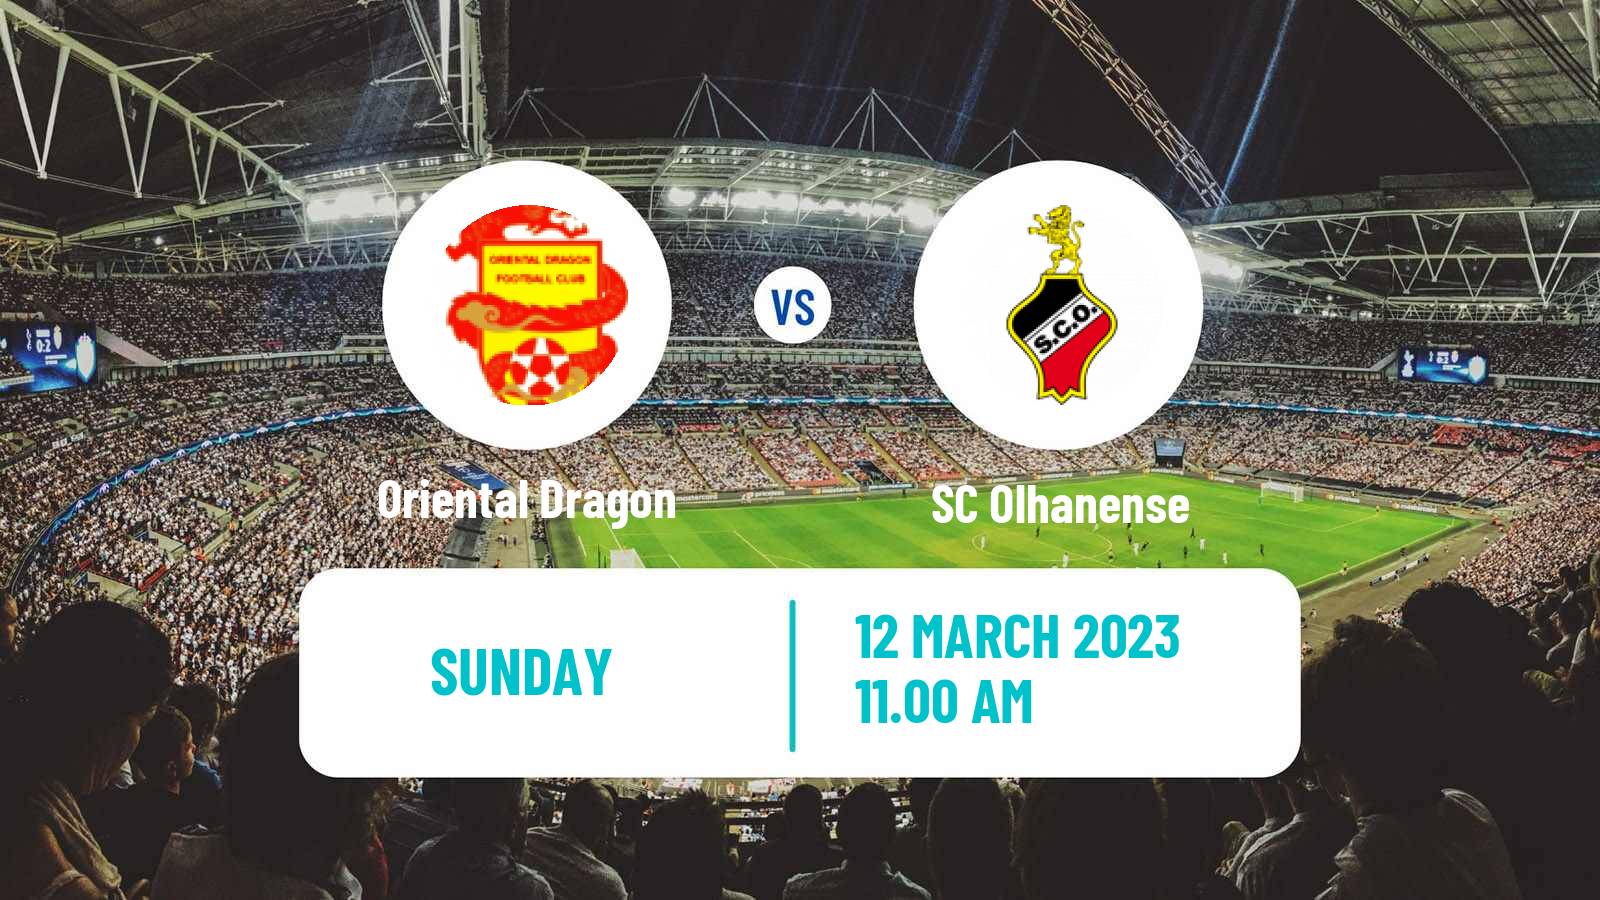 Soccer Campeonato de Portugal Oriental Dragon - Olhanense